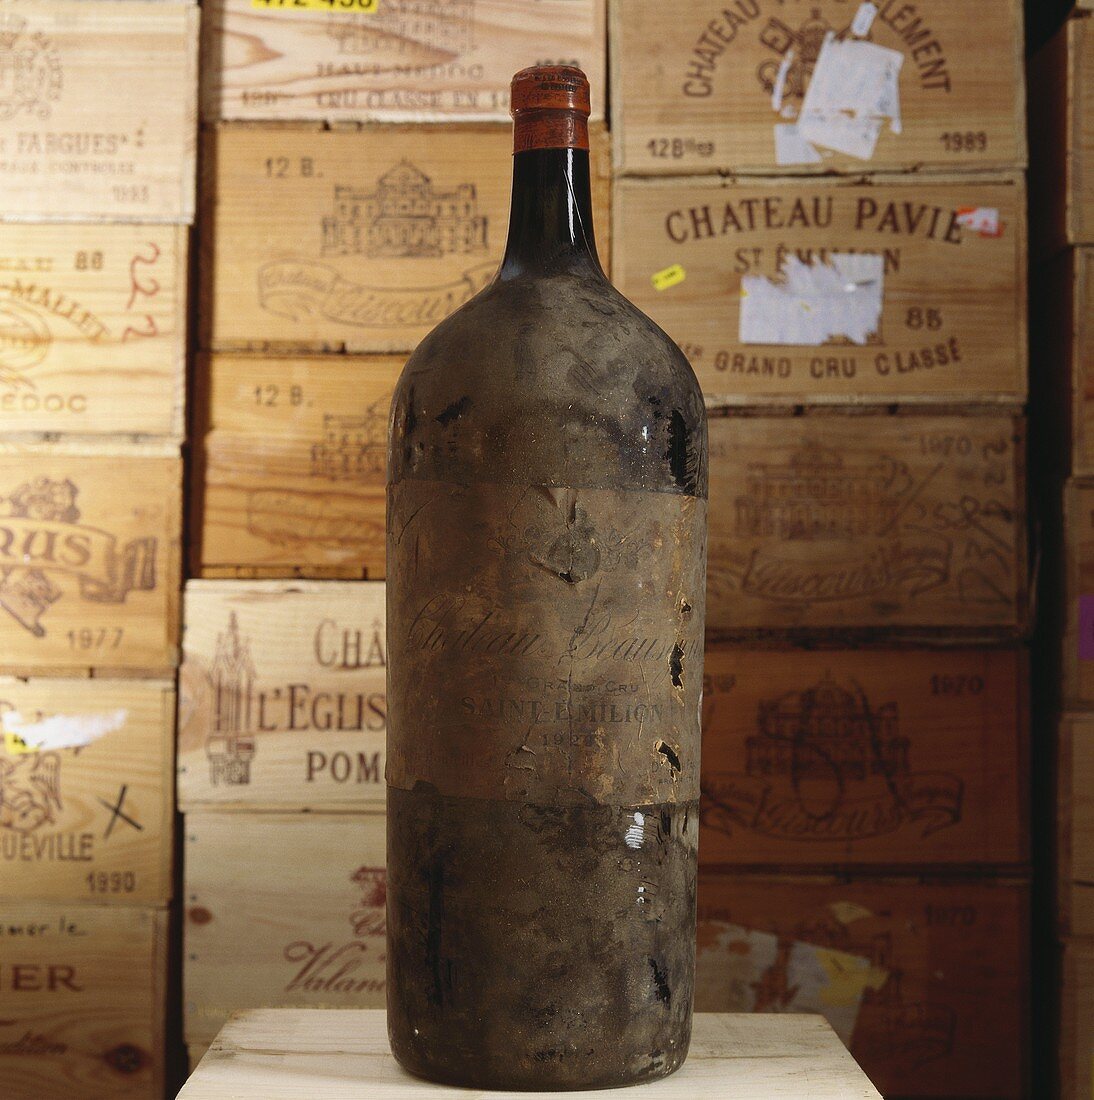 An old bottle of Château Beauséjour